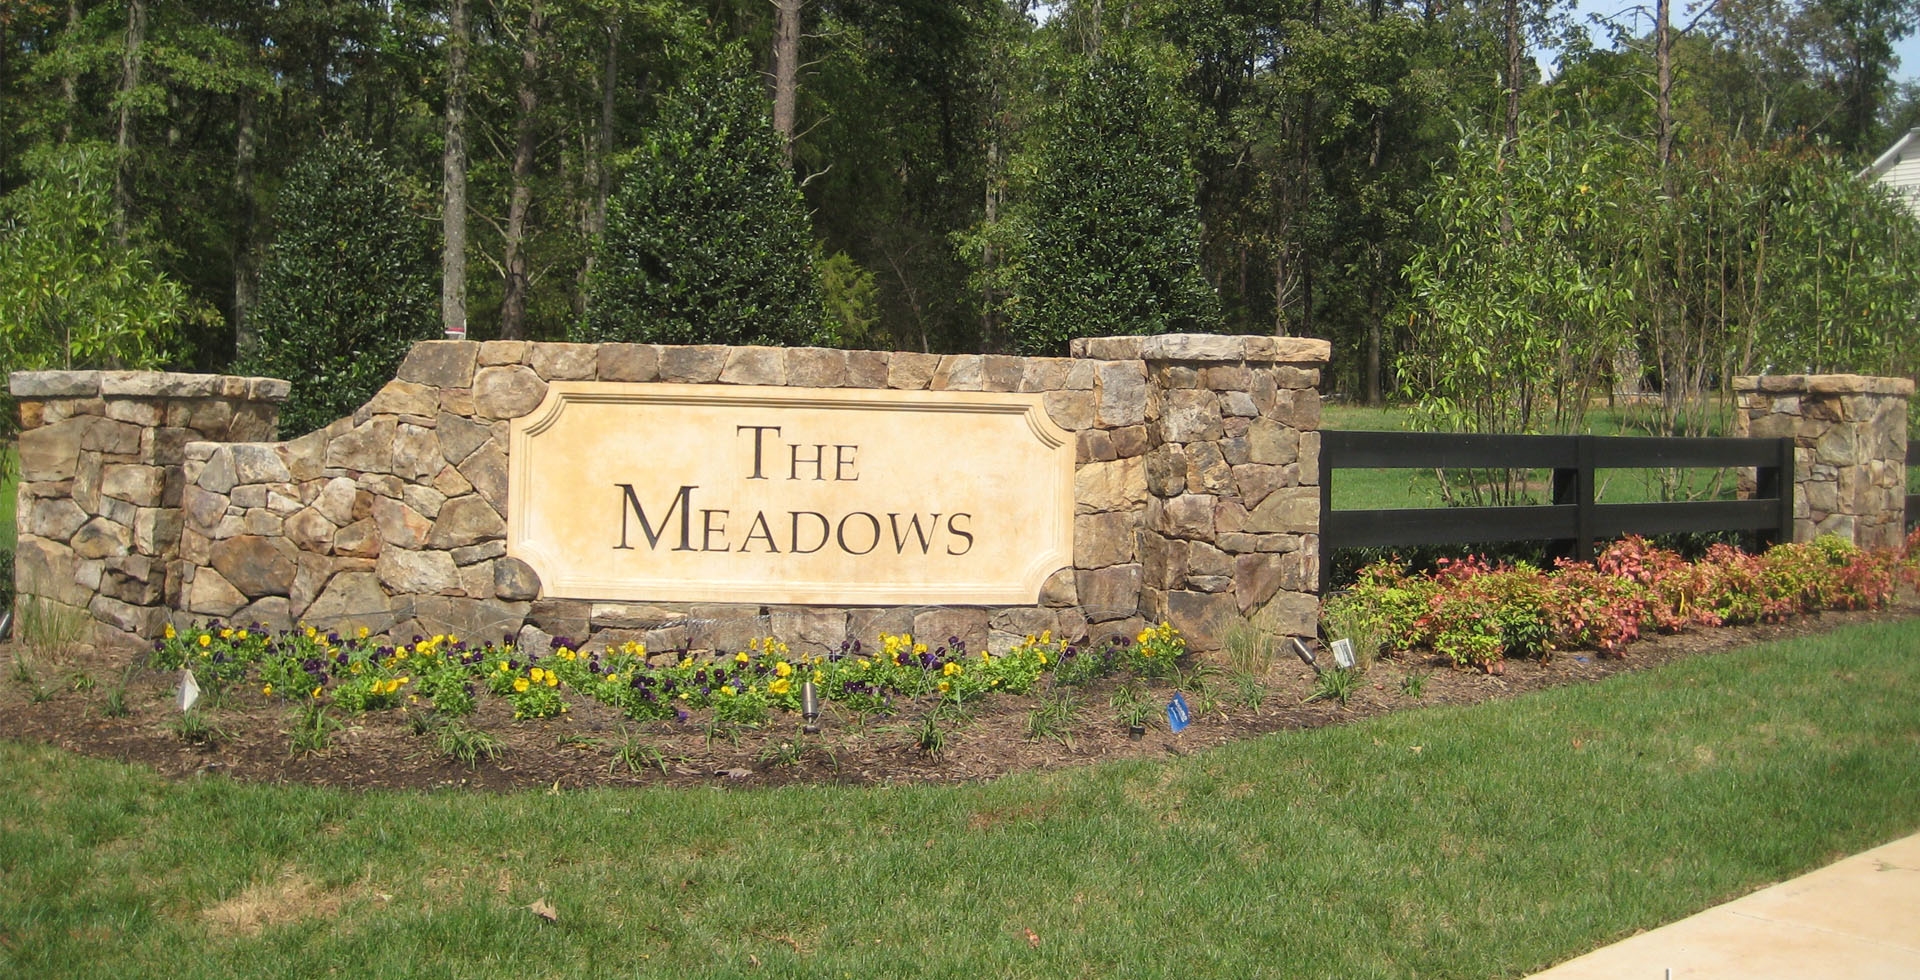   The Meadows  